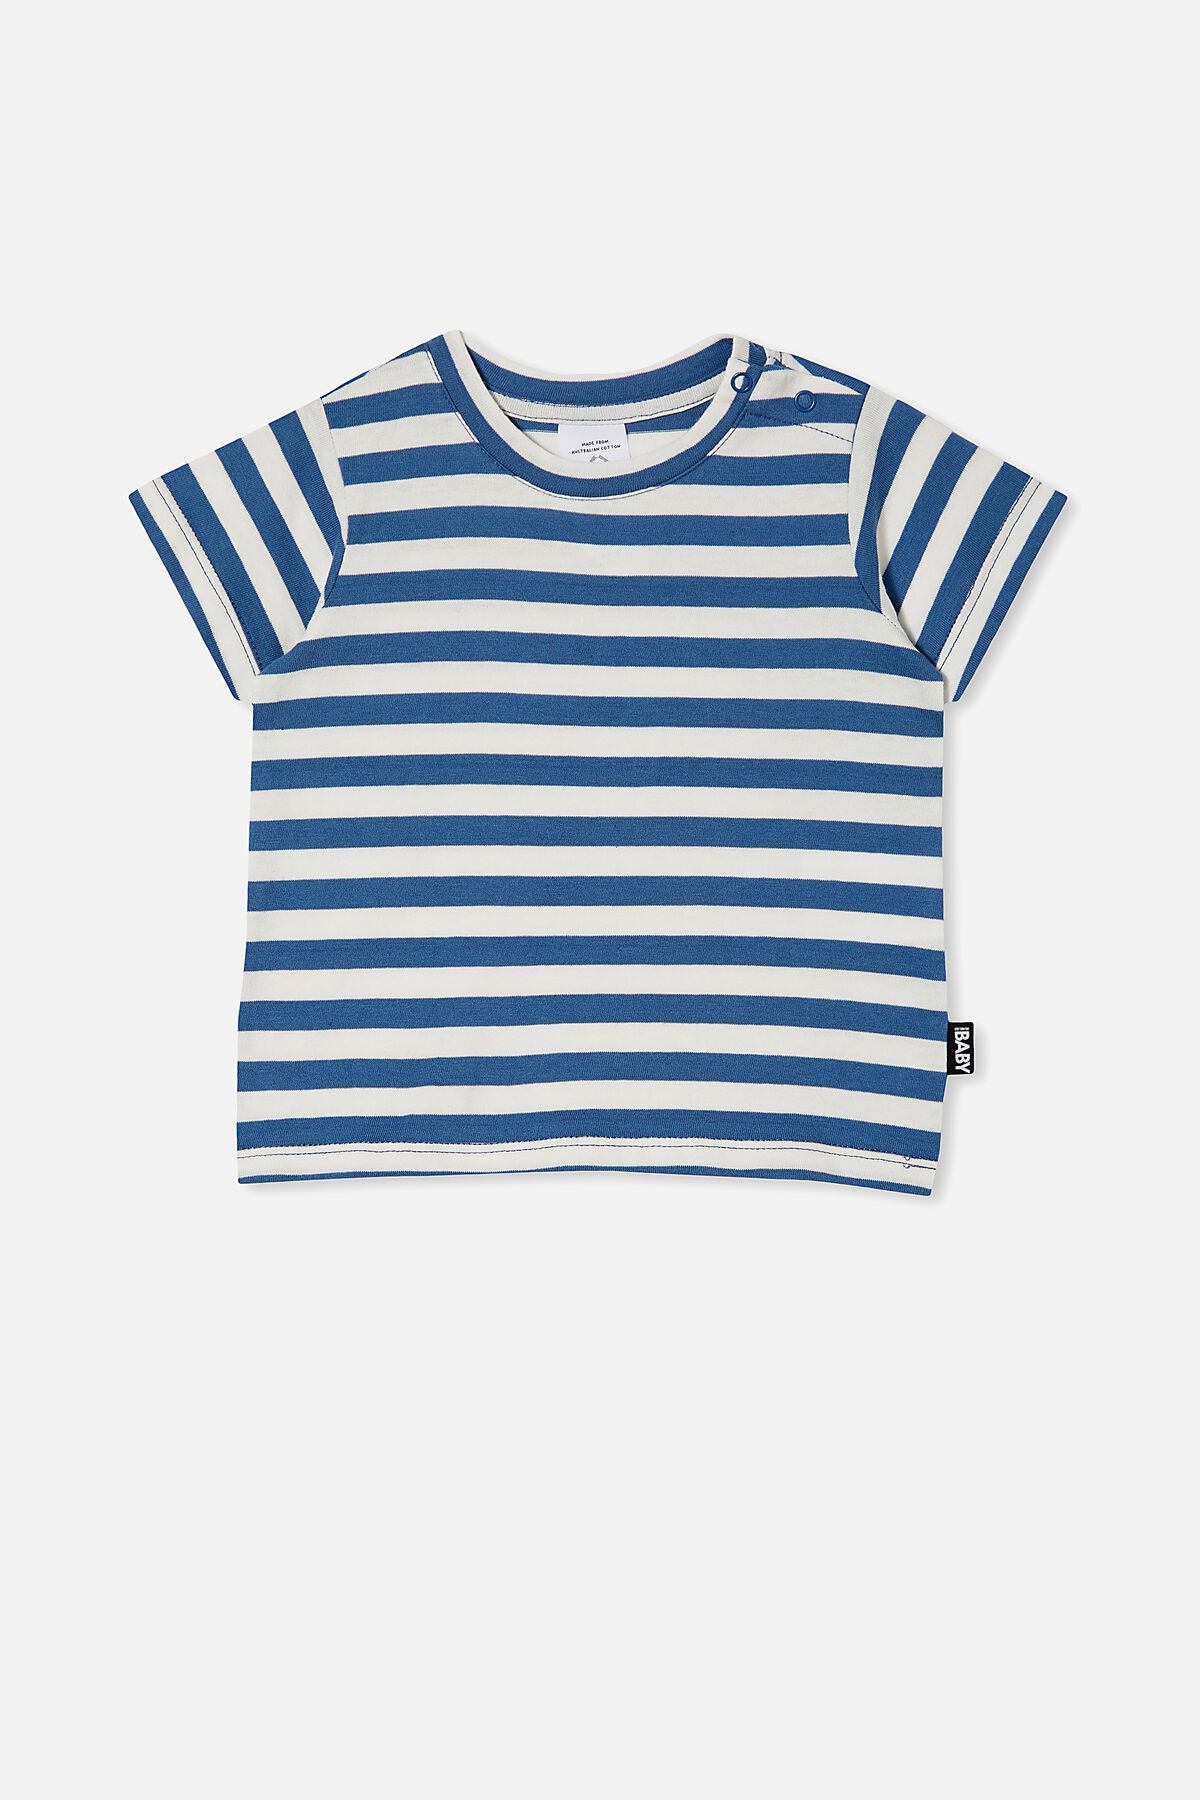 Baby & Newborn Tops, Jackets & T-Shirts | Cotton On Kids